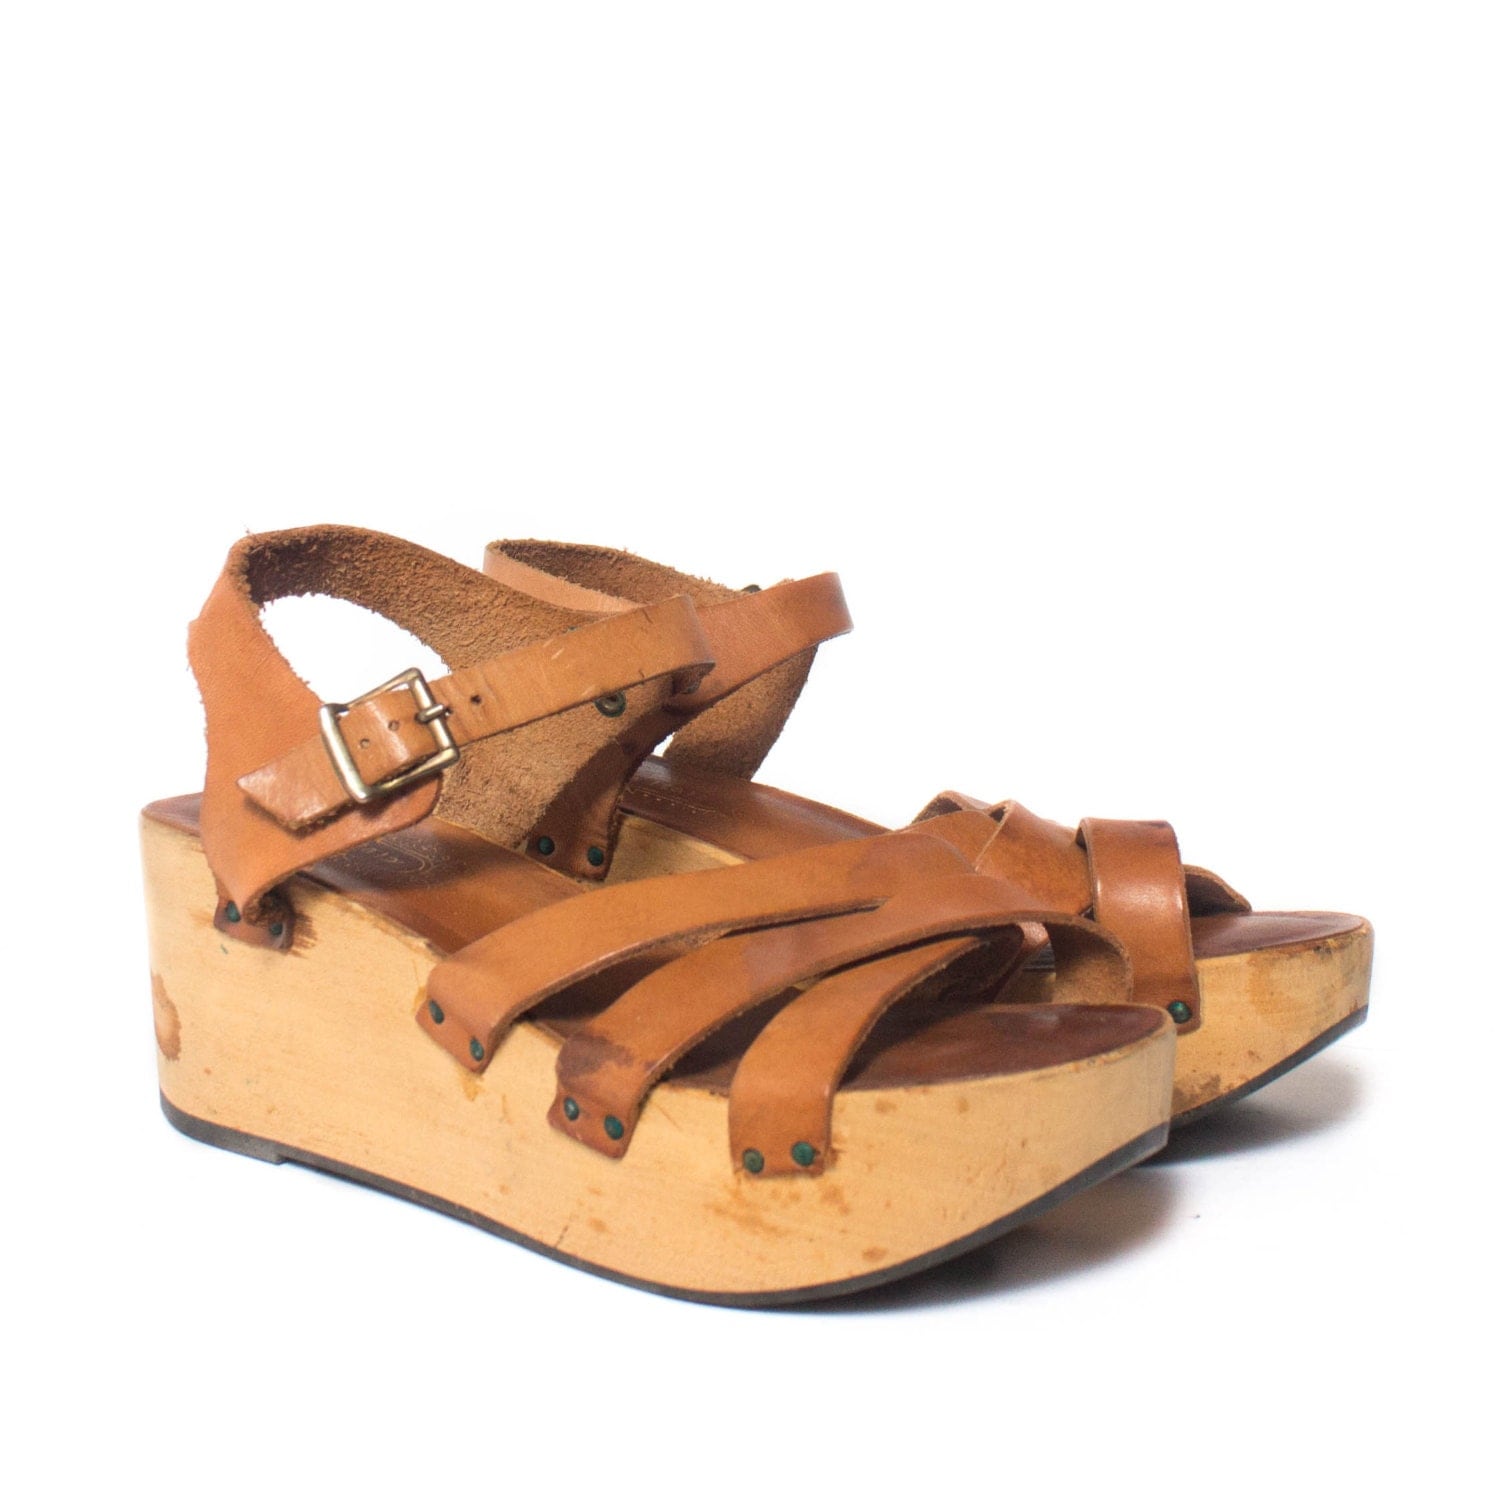 7.5-8 Vintage 1970's Wedge Heel Platform Wood Sandals w/